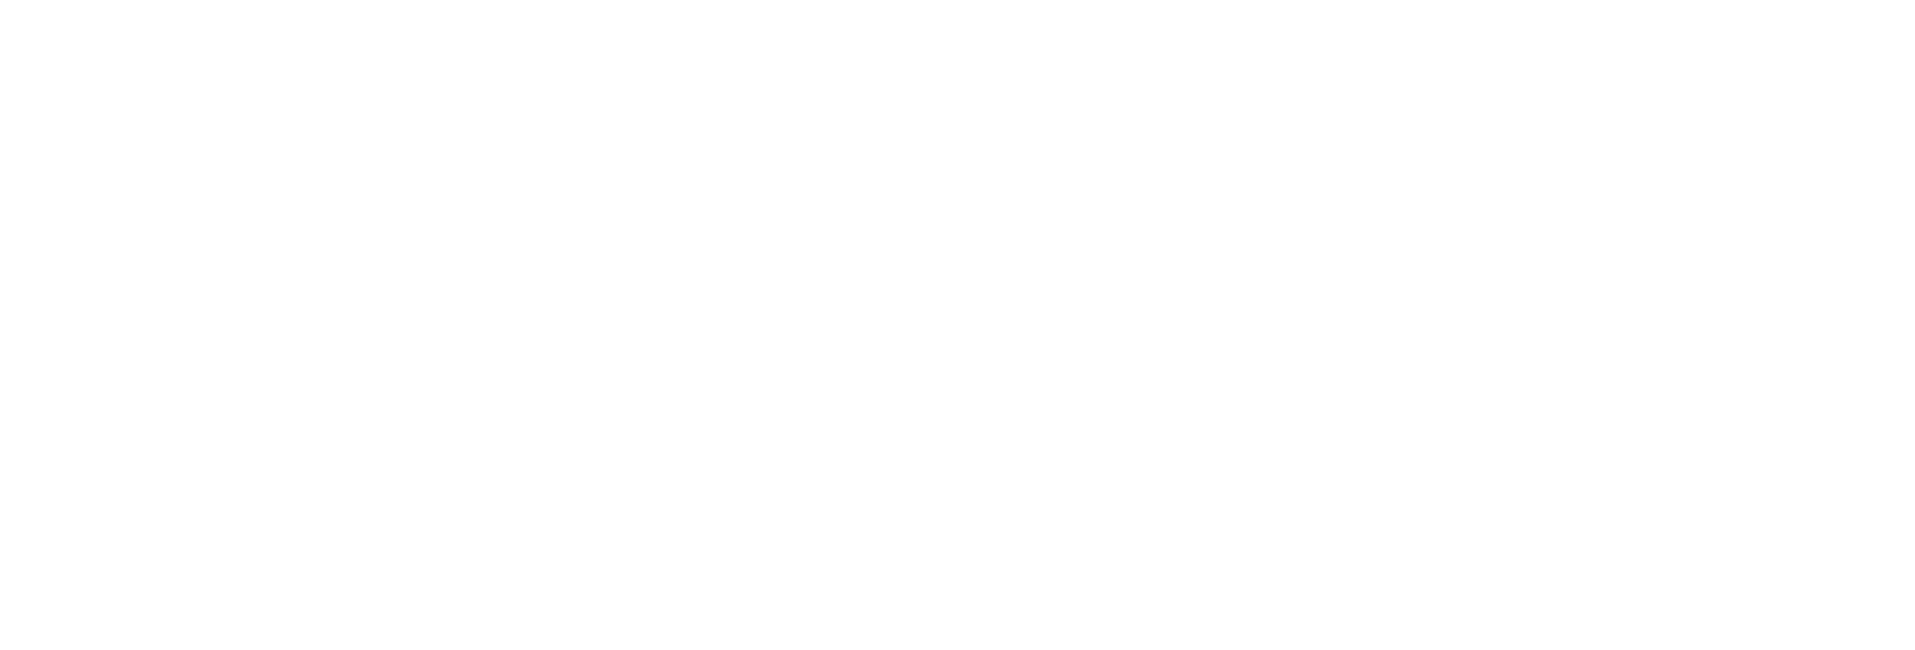 SligoWhite